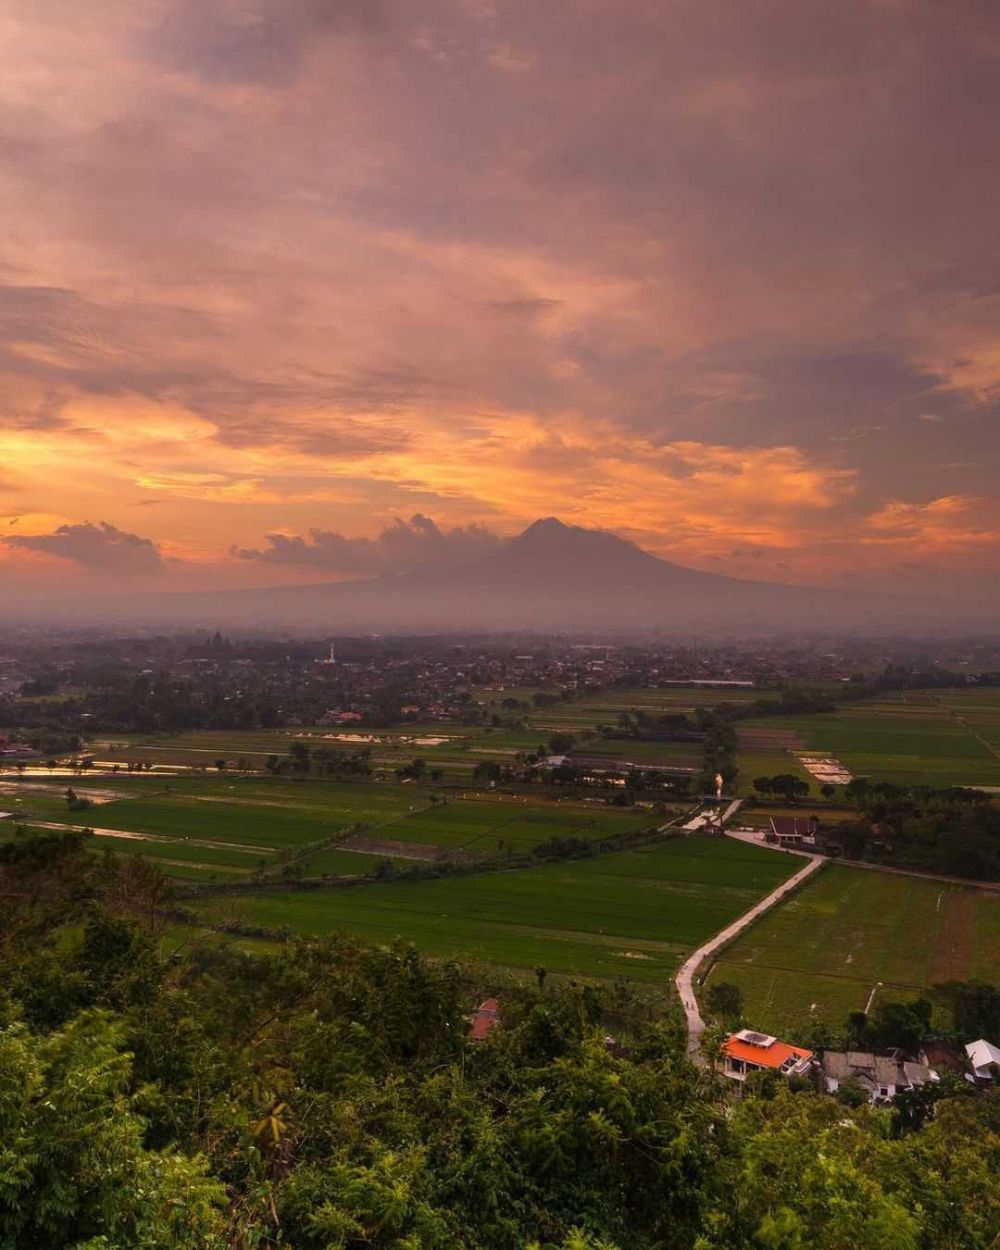 Wisata Dataran Tinggi di Yogyakarta dengan View Sunset Memukau